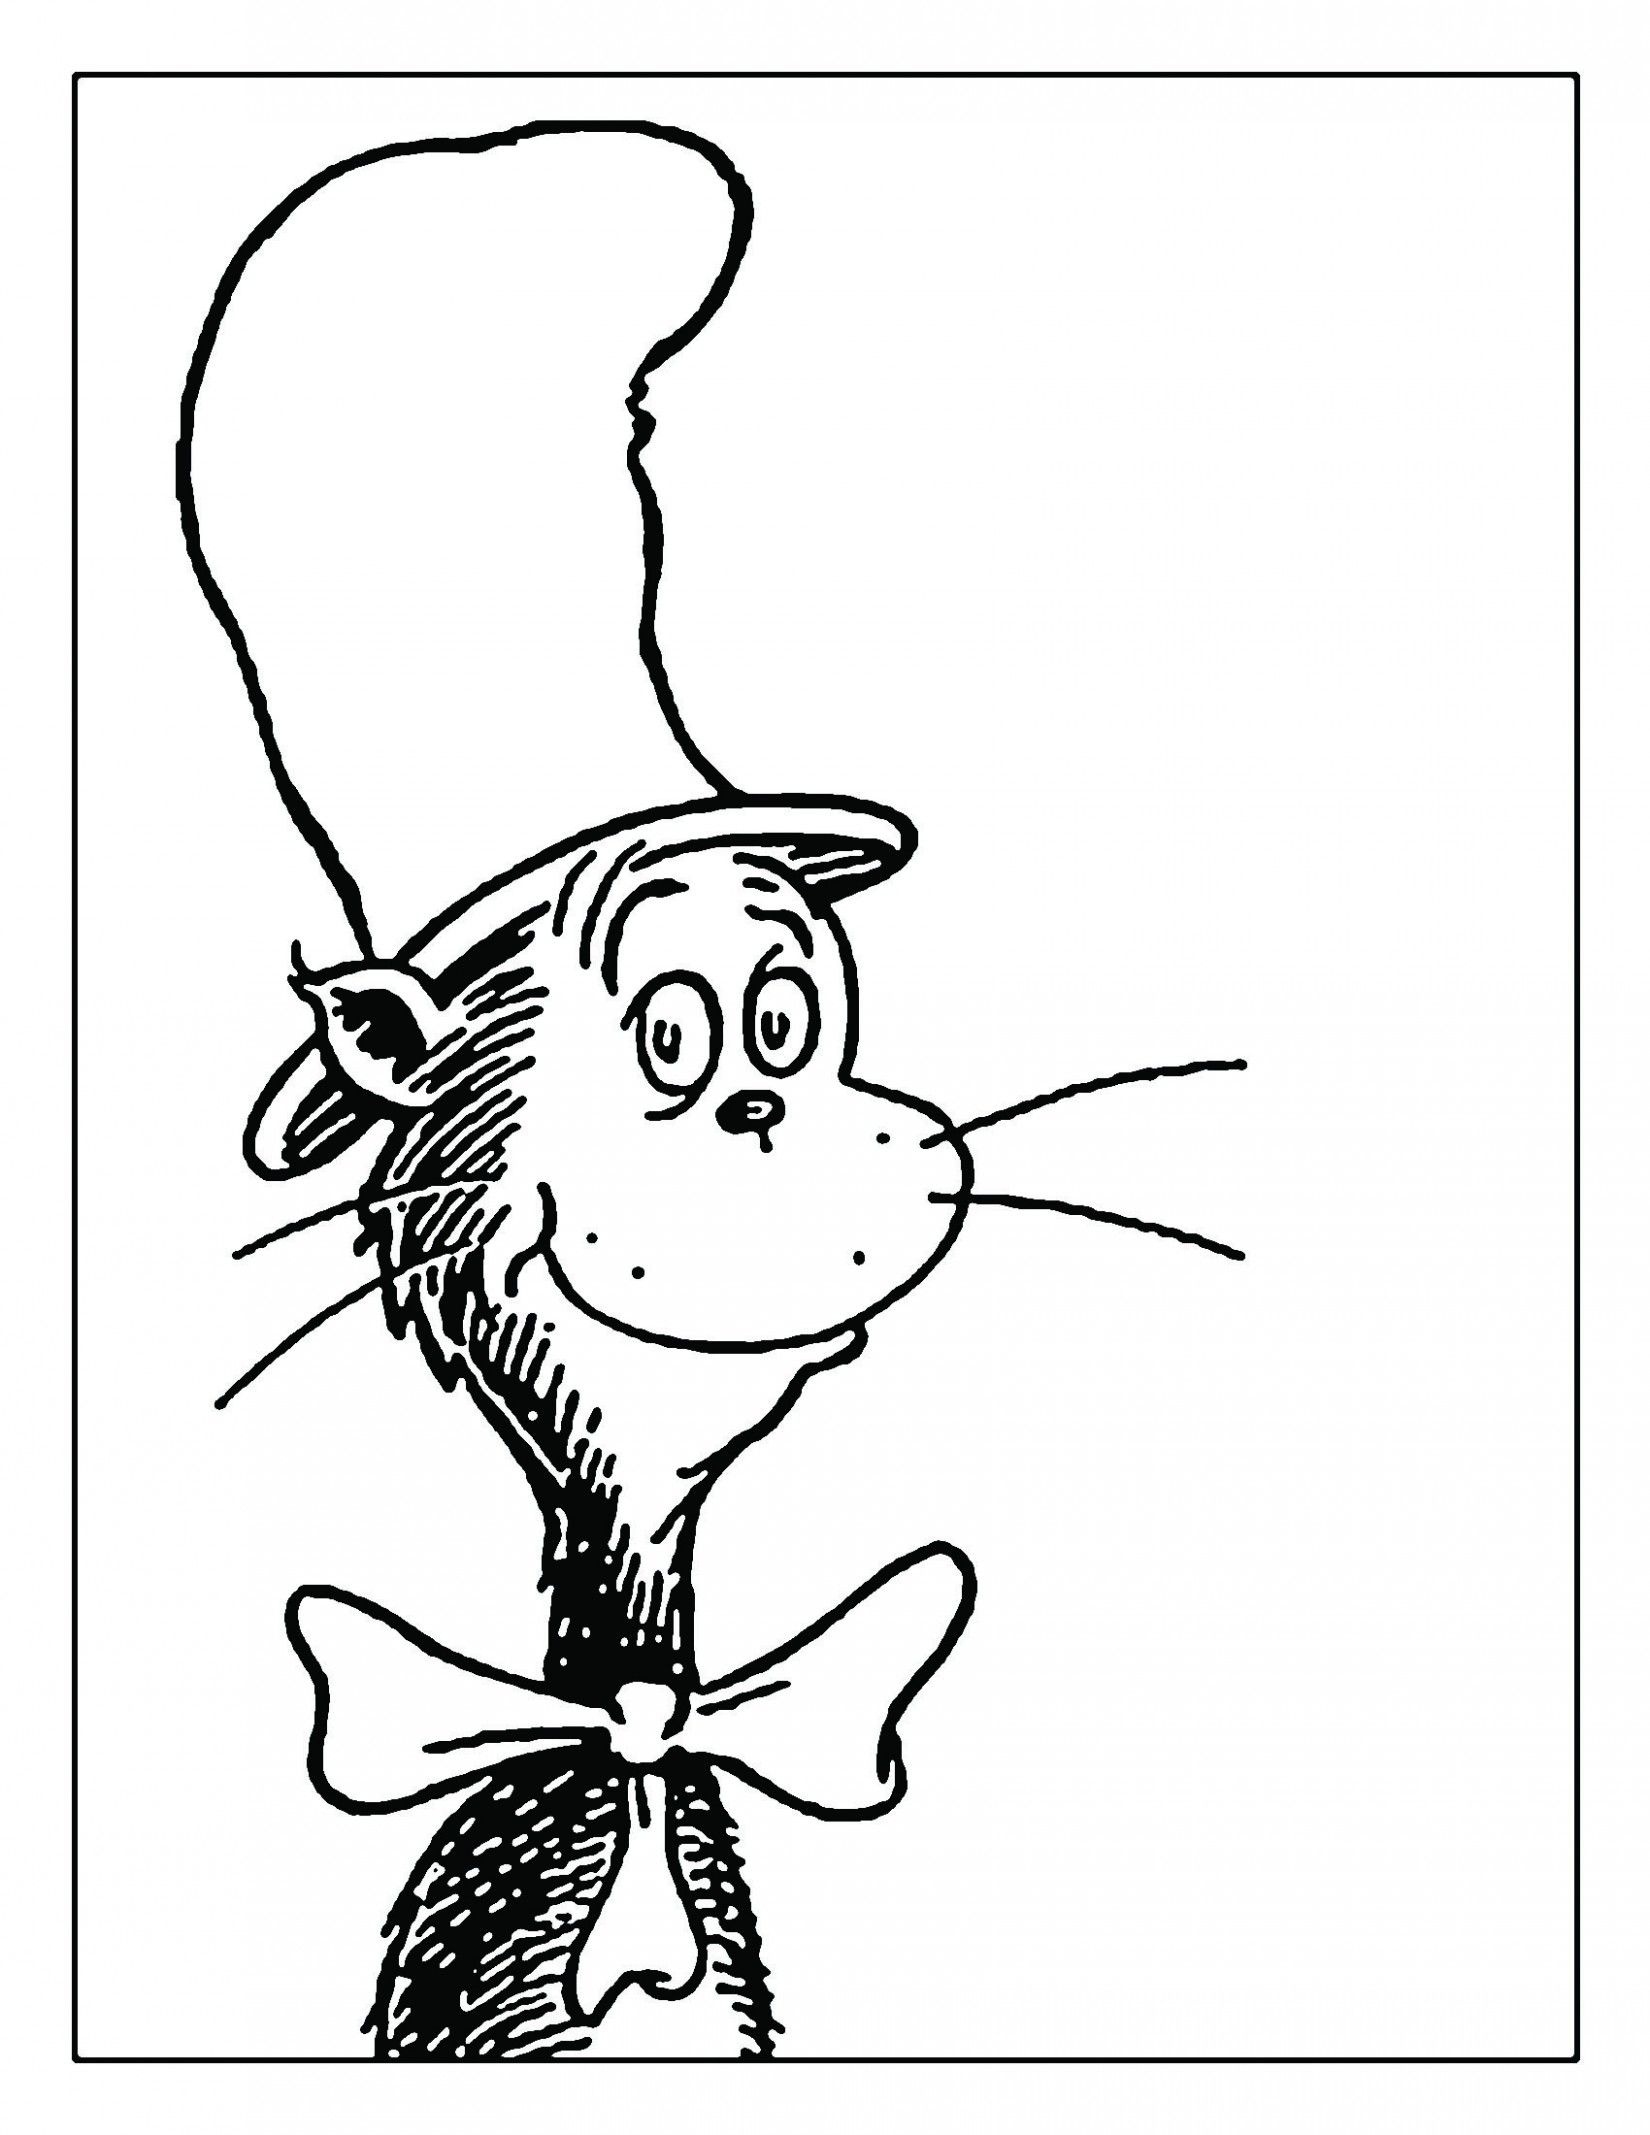 Dr. Seuss Cat In The Hat | -Dr Seuss- | Dr Seuss Coloring Pages, Dr - Free Printable Dr Seuss Characters